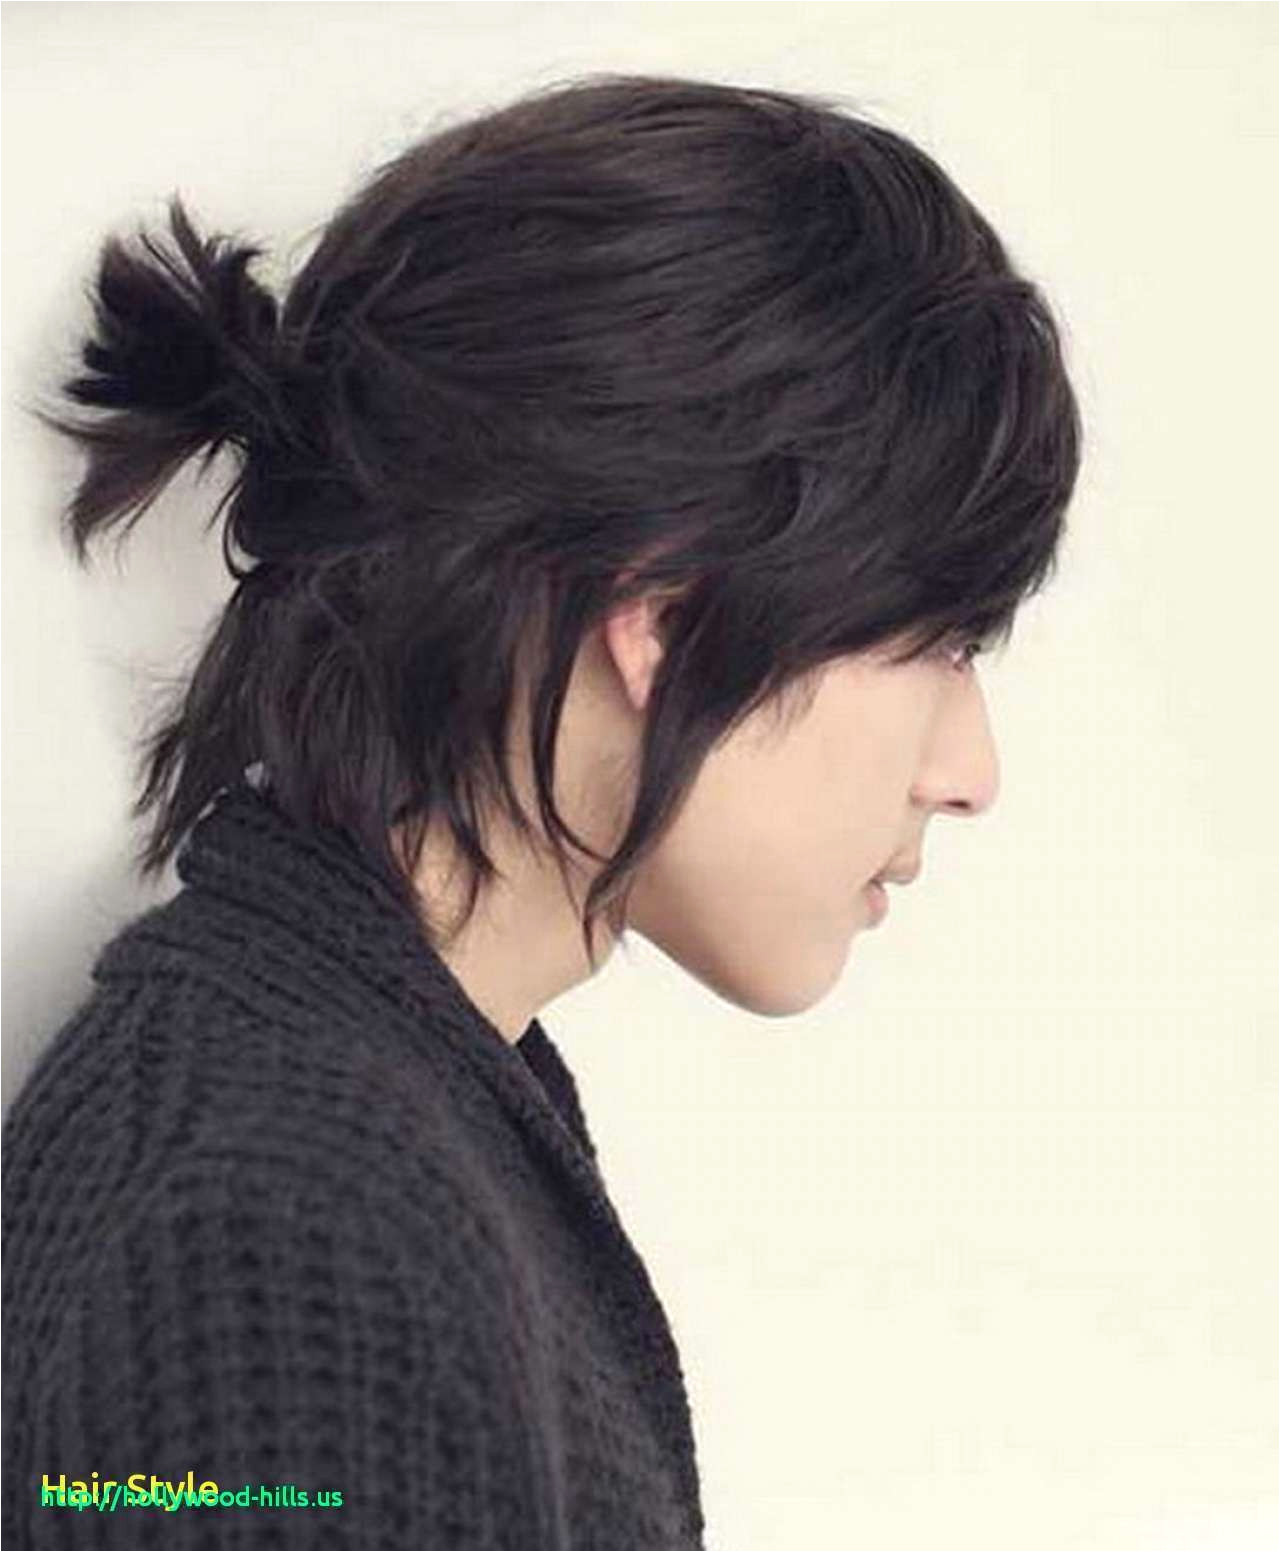 Long Hair Cuts for Men Awesome asian Male Long Hair Cut Hairstyles Latest asian Haircut 0d